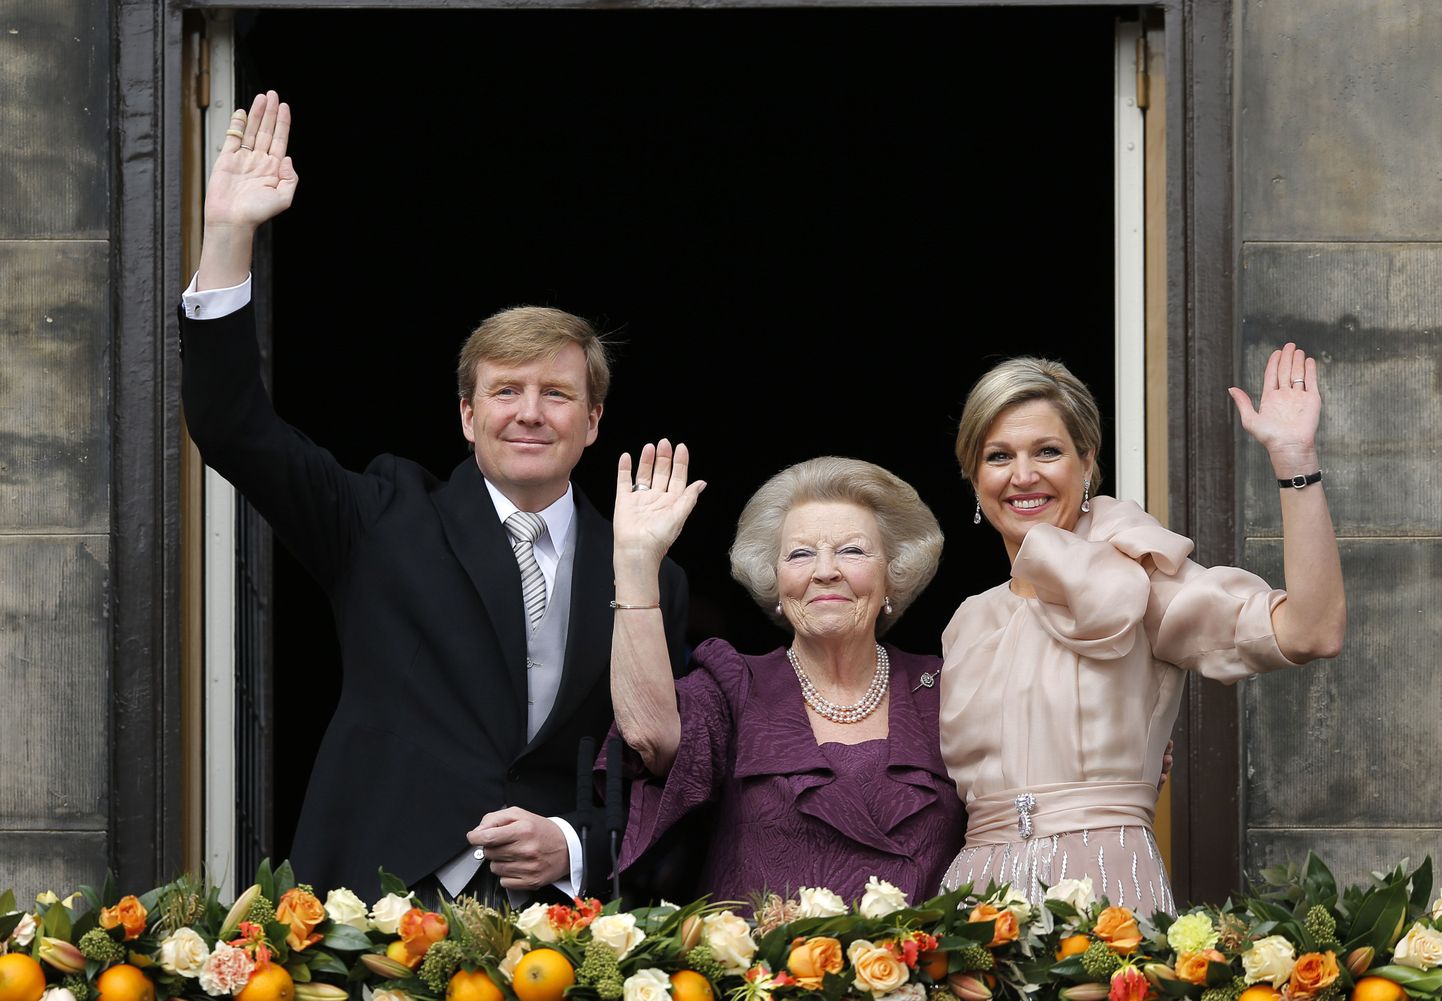 Kuninganna Beatrix oma poja Willem-Alexanderi ja tema abikaasa Maximaga.